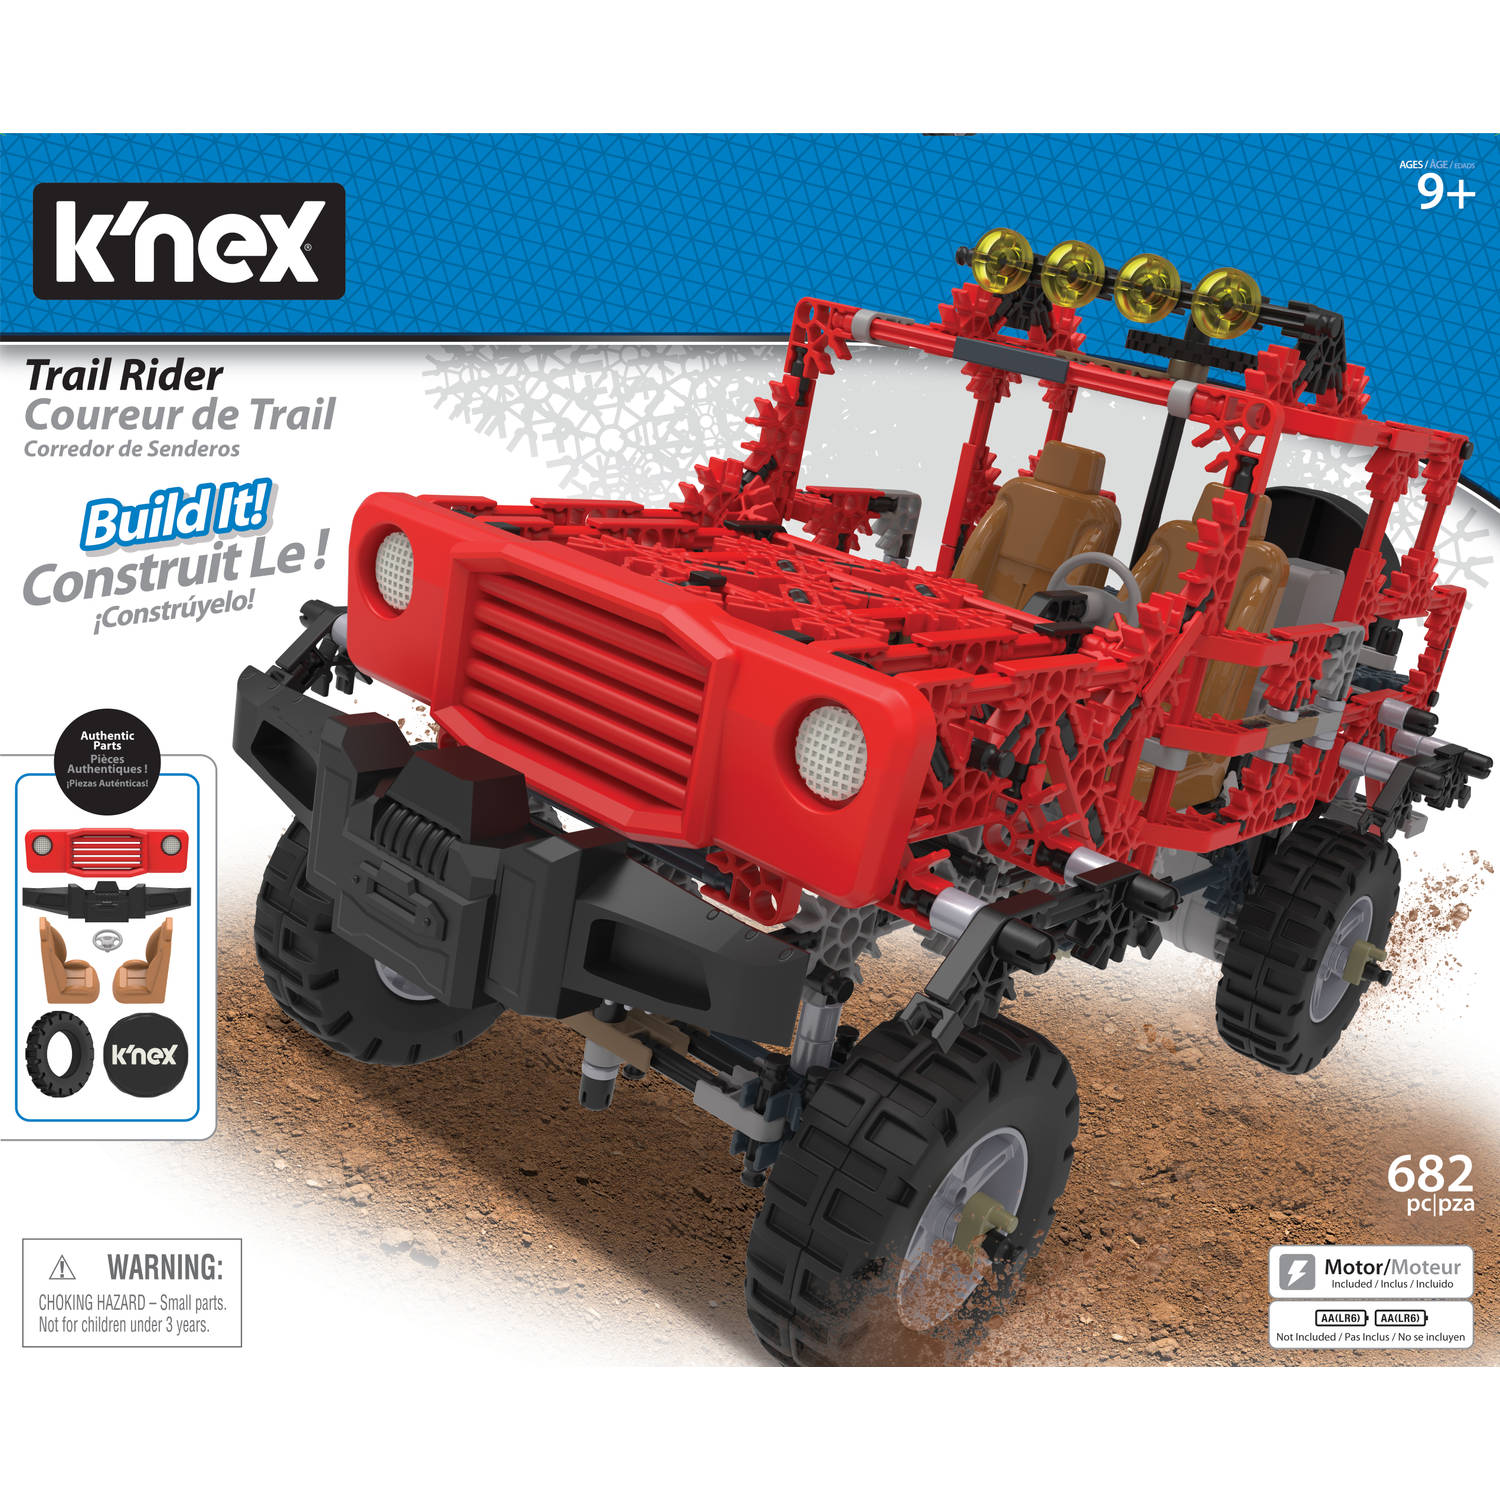 knex-gemotorizeerde-rode-jeep-bouwset